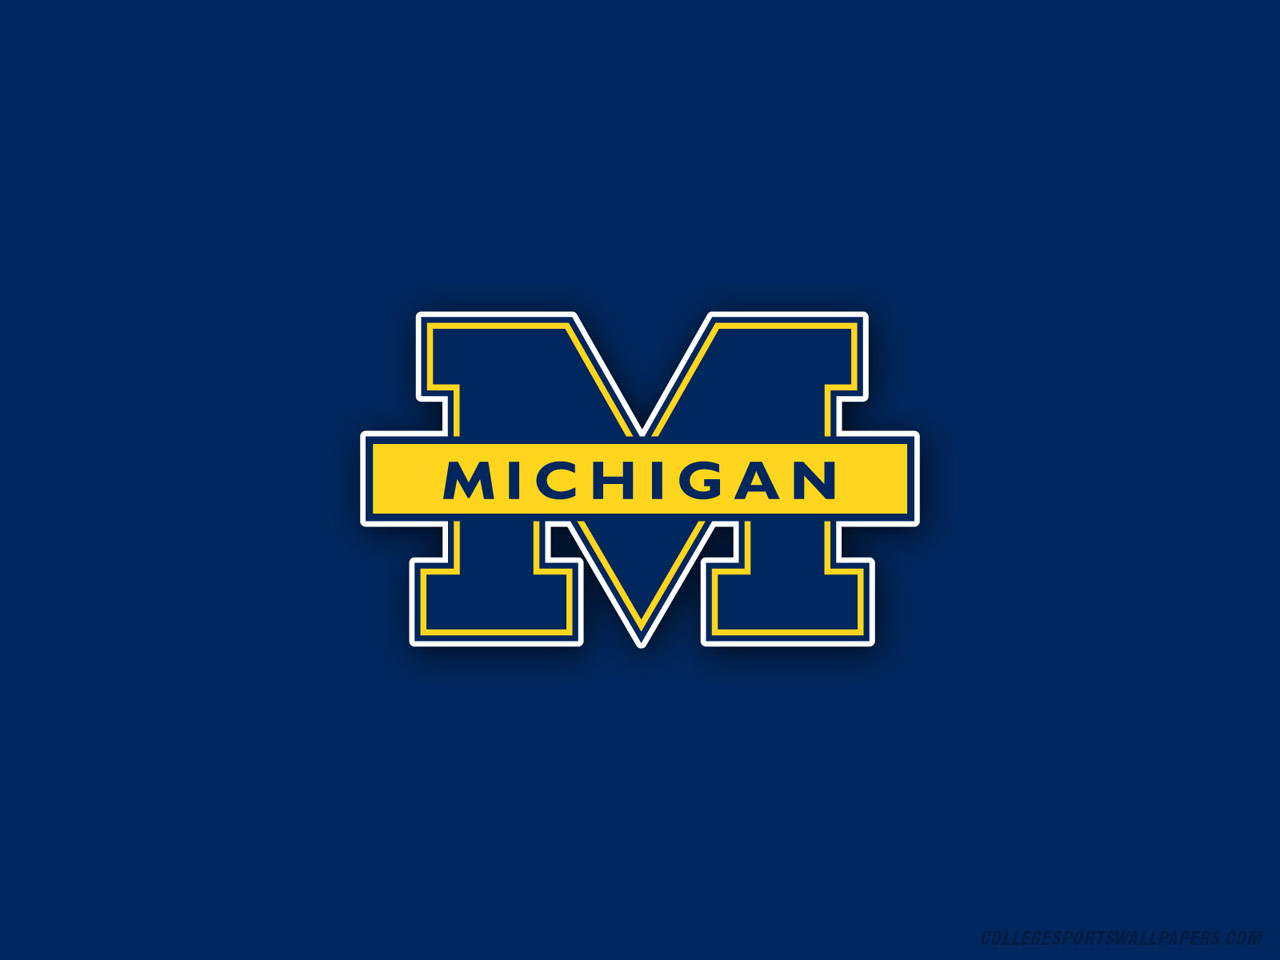 Michigan Wolverines Puter Desktop Wallpaper Pictures Image